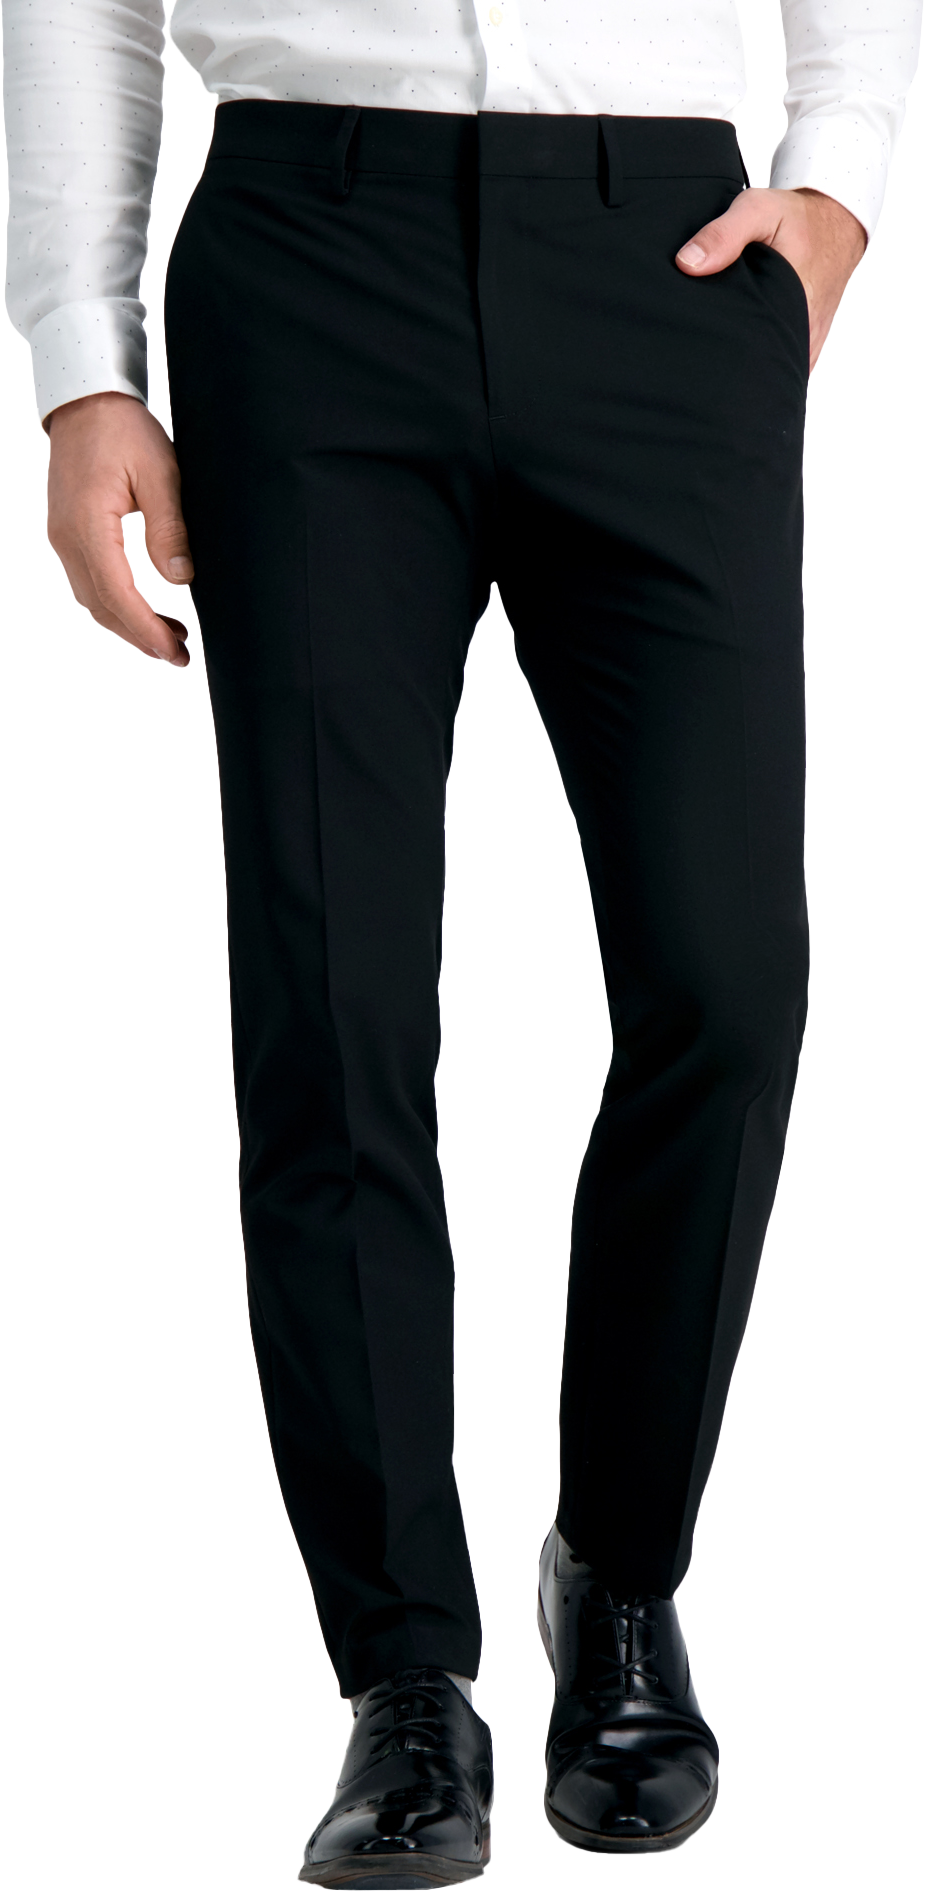 JNGSA Men's Slim-Fit Dress Pant Straight-Leg Flat-Front Trousers